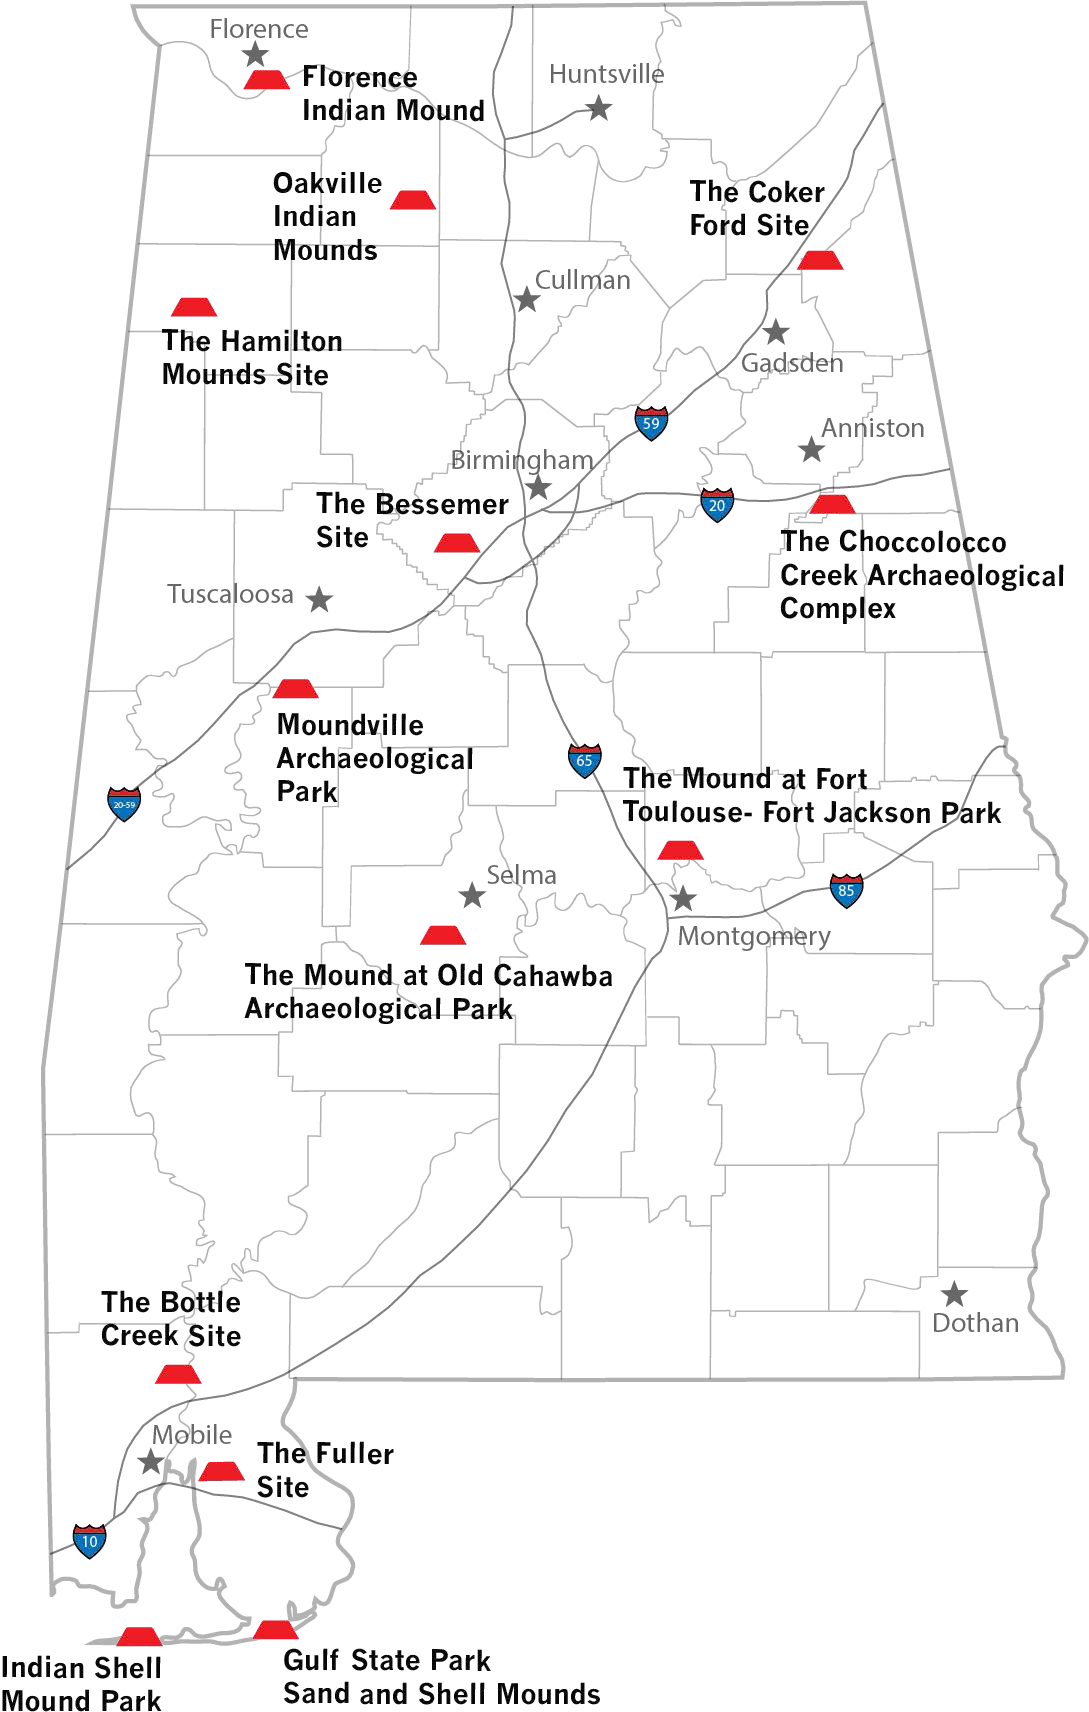 Map of Alabama showing Indigenous Mound Trail sites, major highways 